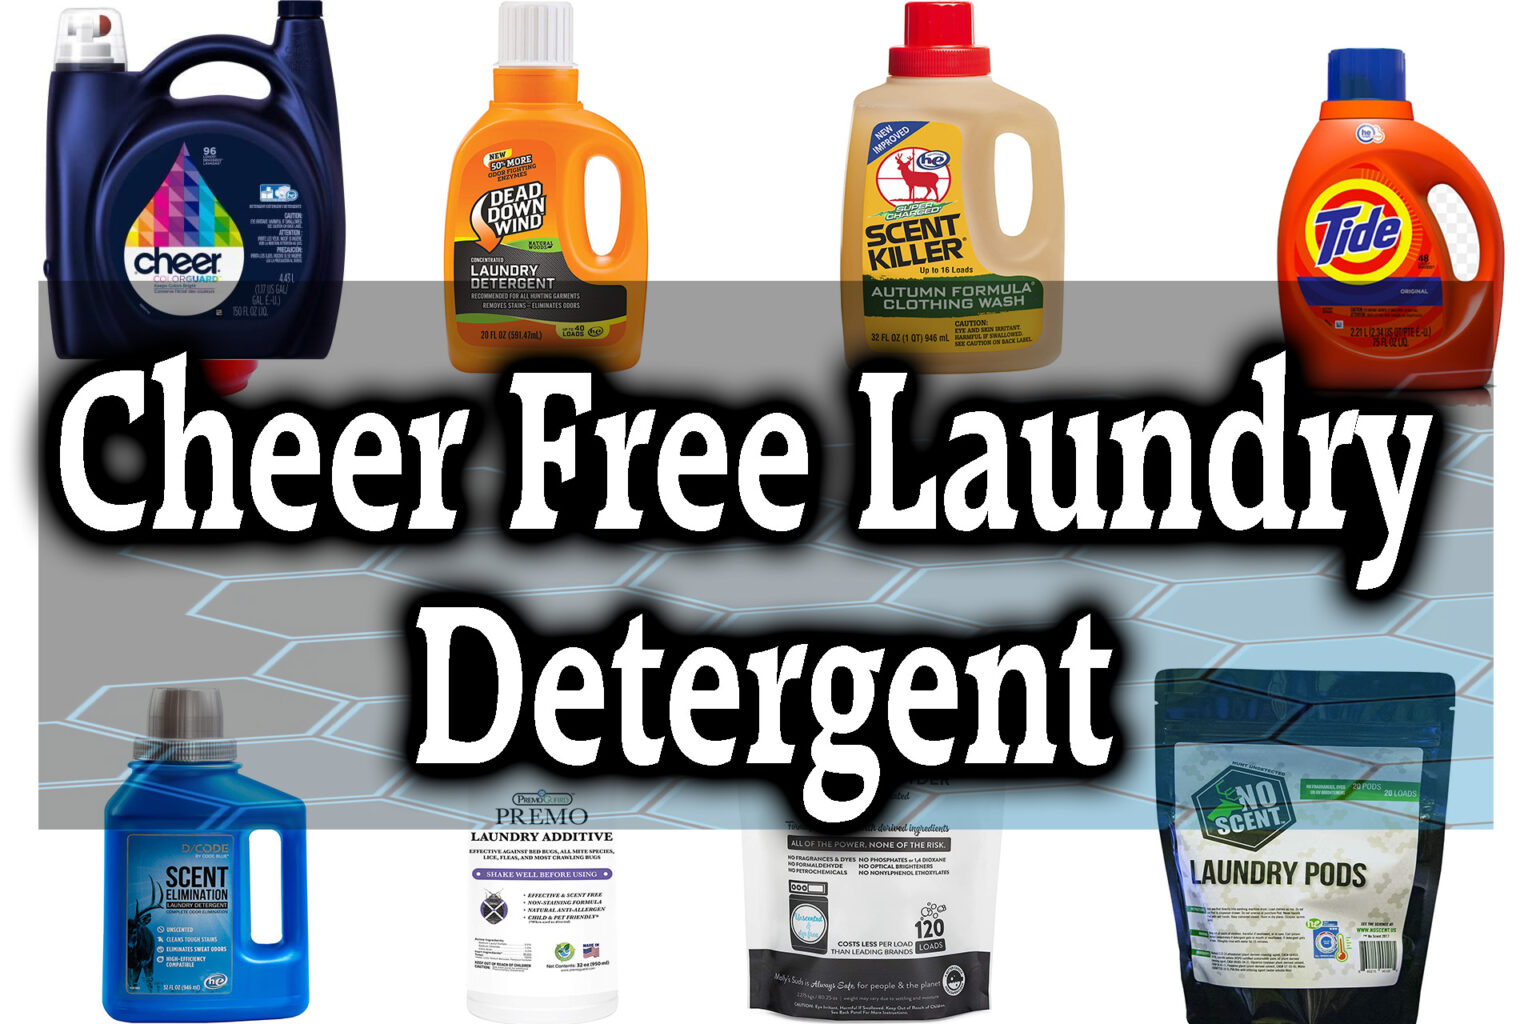 cheer-free-laundry-detergent